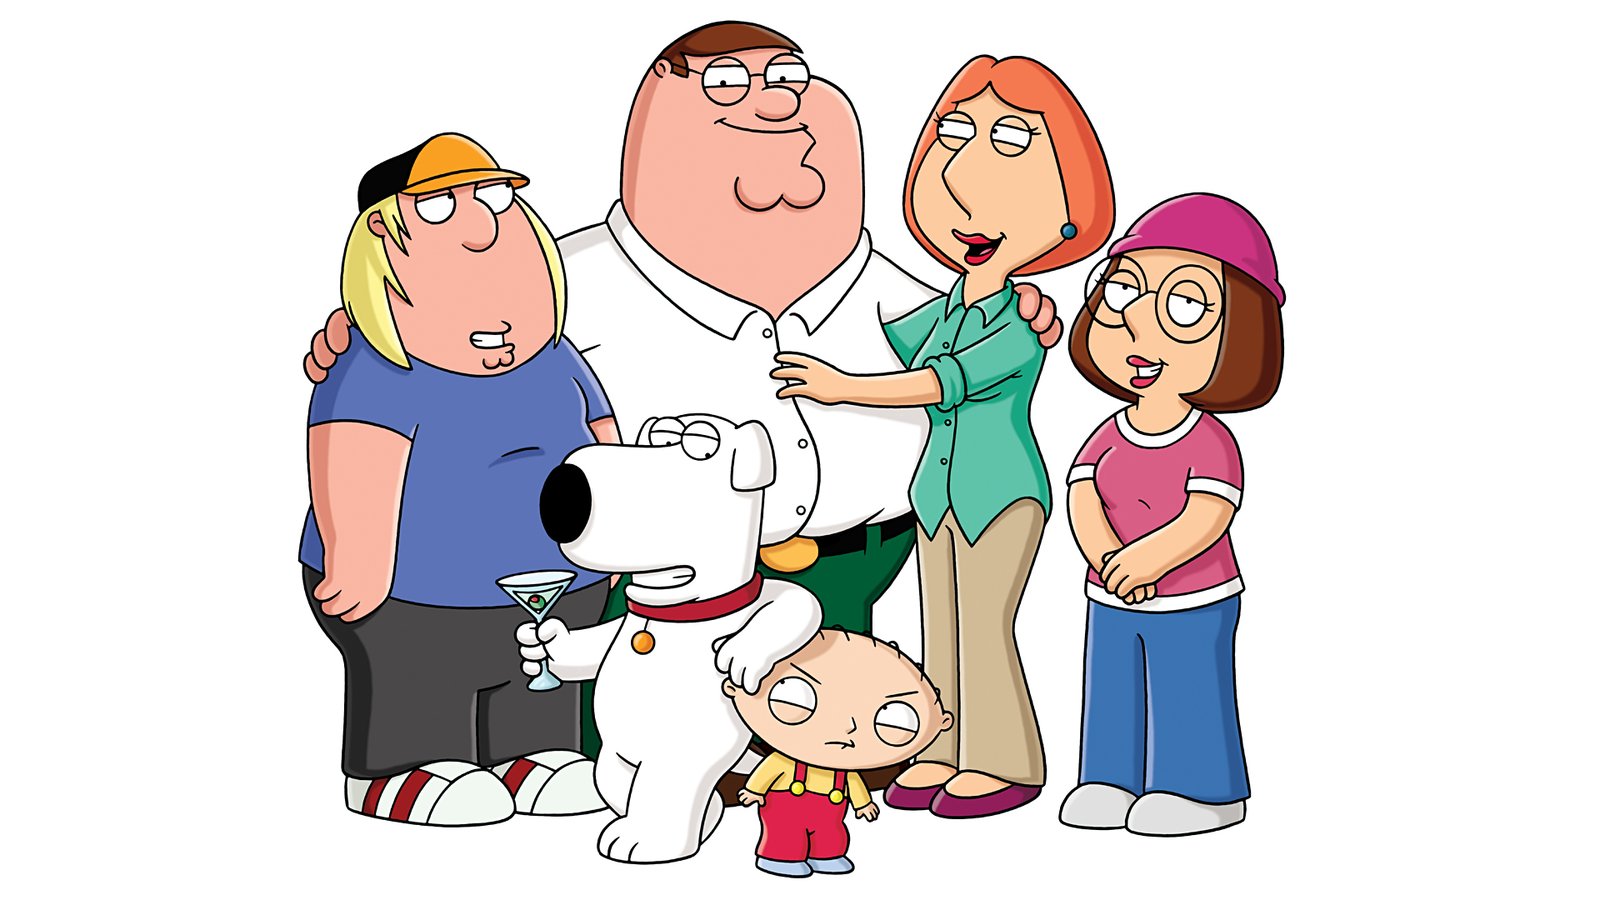 Гриффины / Family Guy